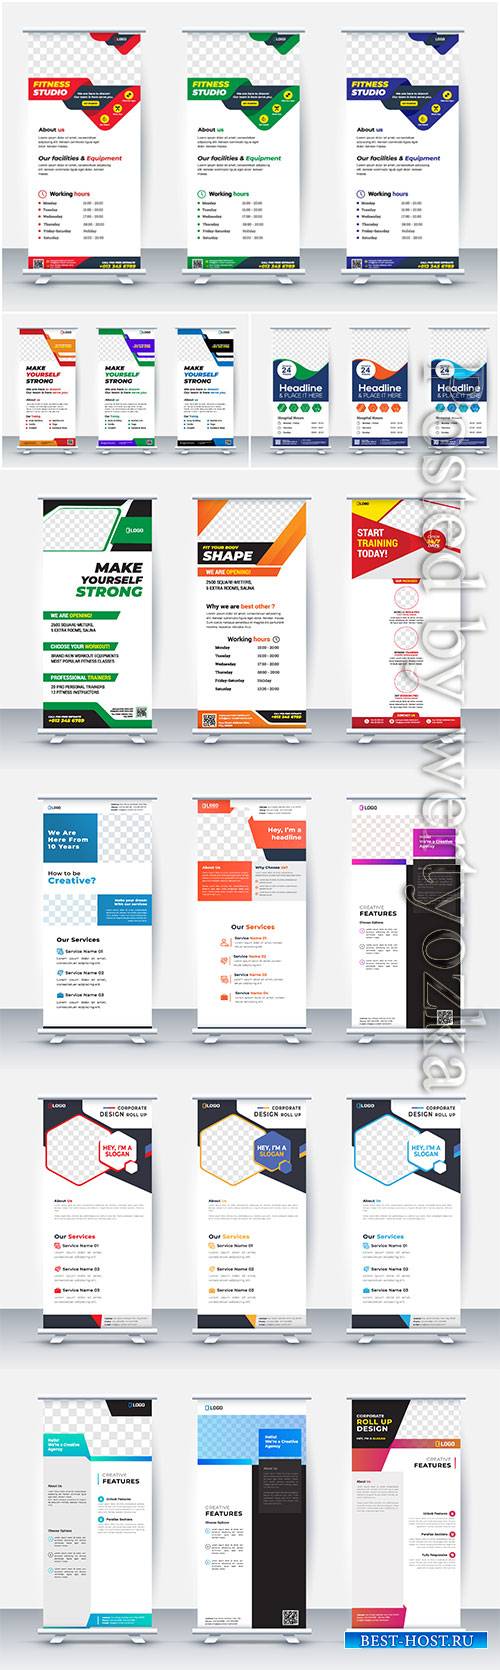 Business roll up banner stand poster, brochure flat design template creativ ...